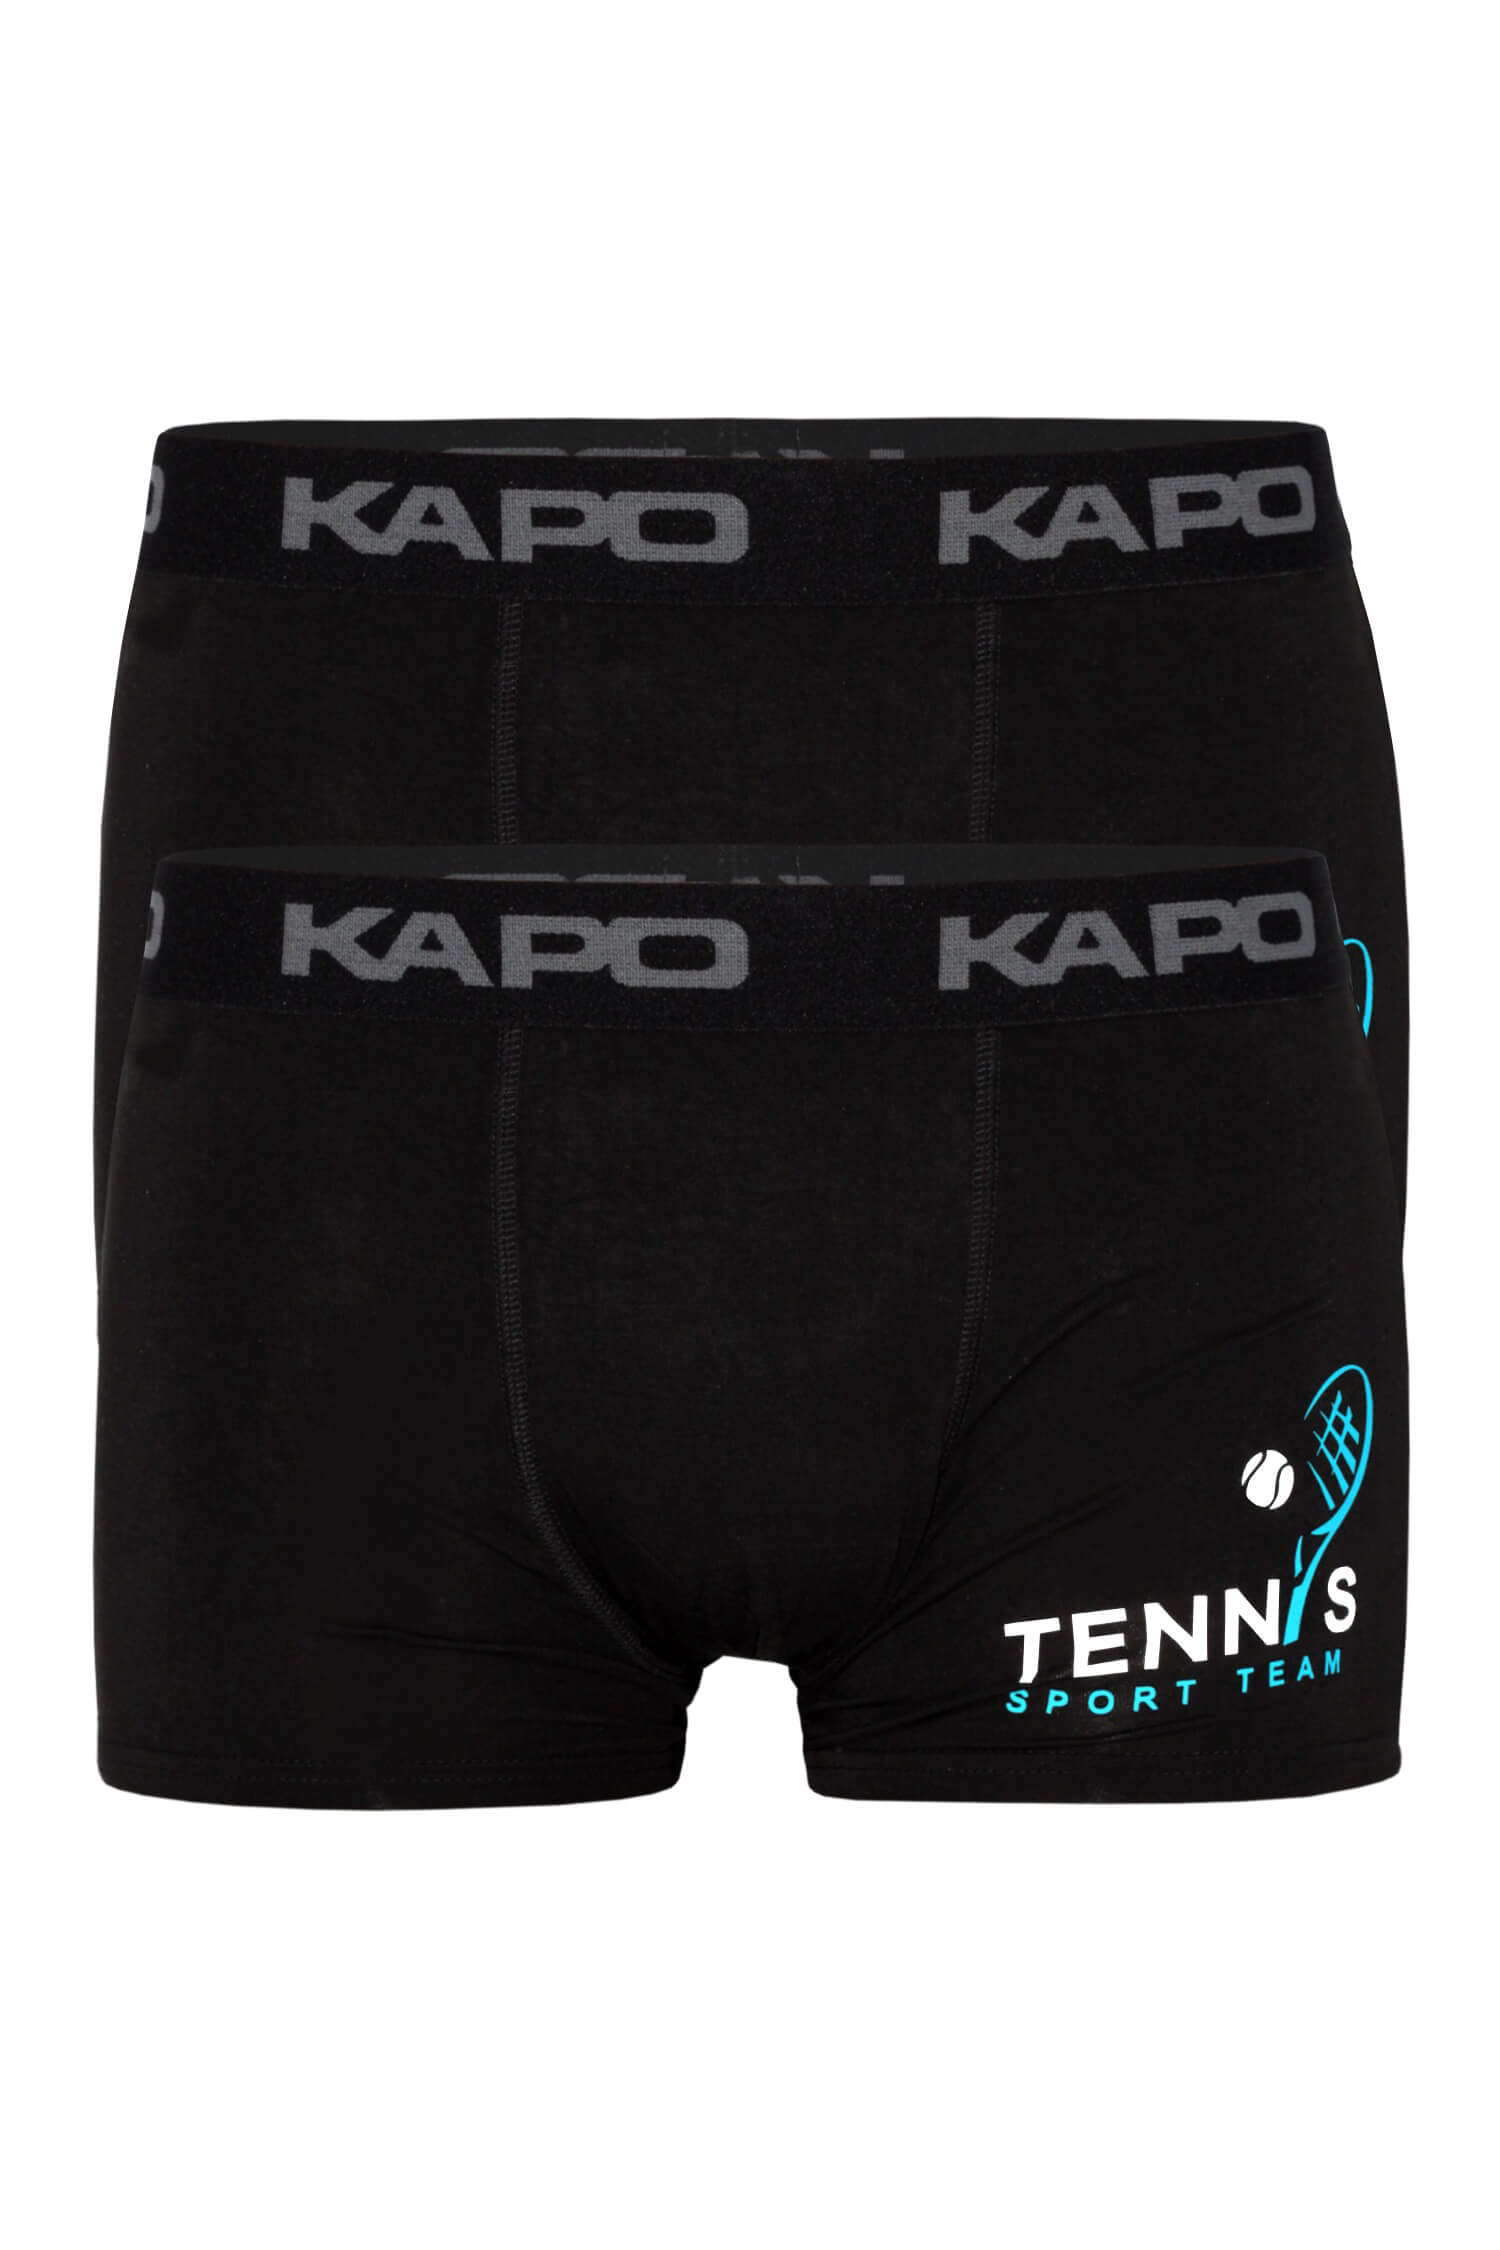 Rafael Kapo tenis boxerky - dvojbal M černá